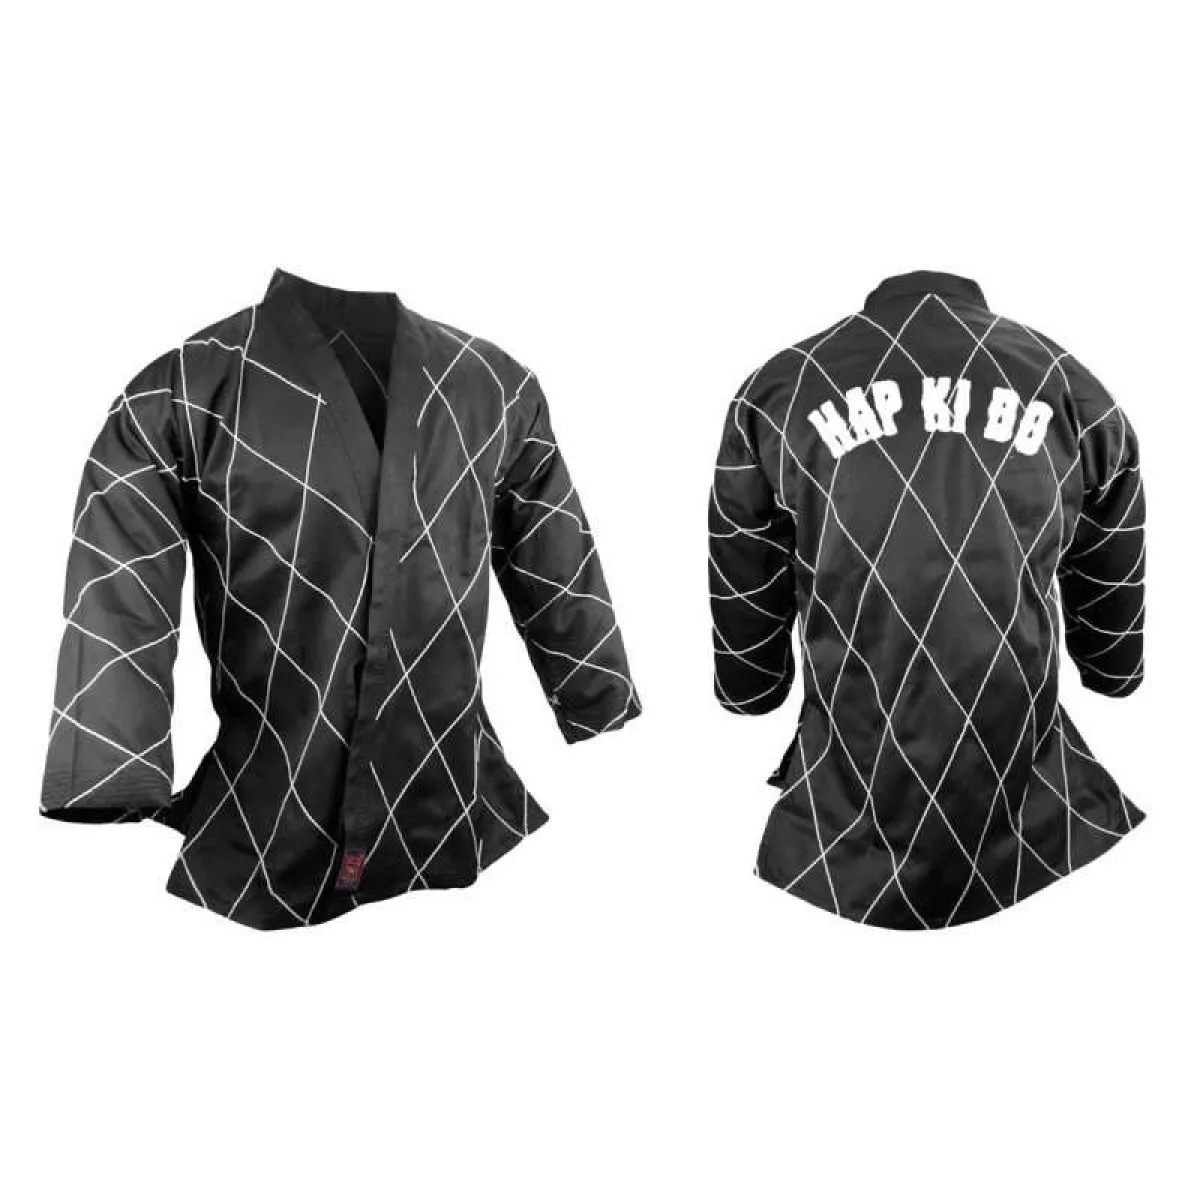 Hapkido jas zwart/wit